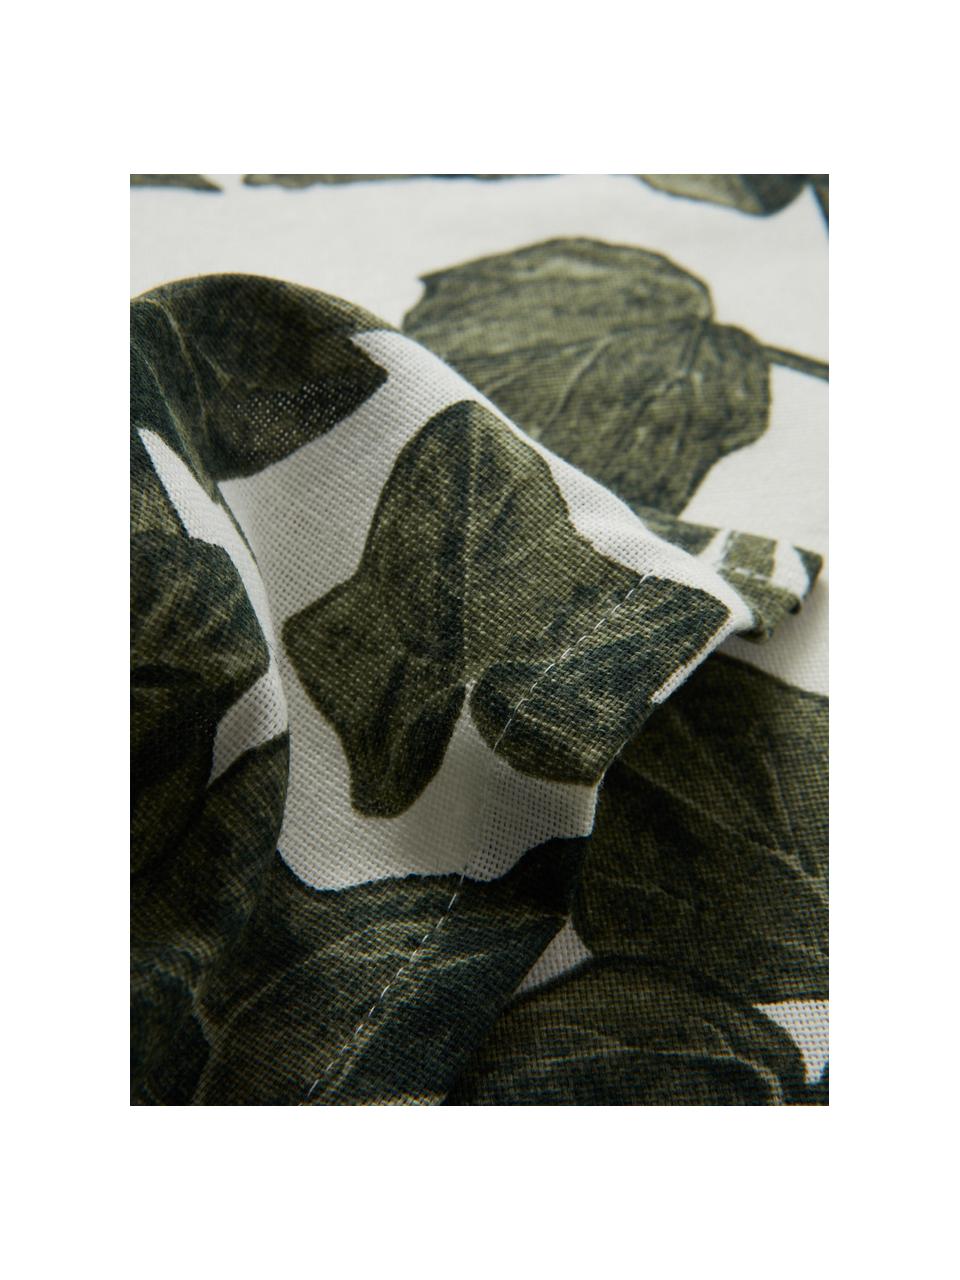 Mantel Ivy, tamaños diferentes, 100% algodón, Verde oscuro, negro, Off White, De 6 a 8 comensales (An 145 x L 250 cm)